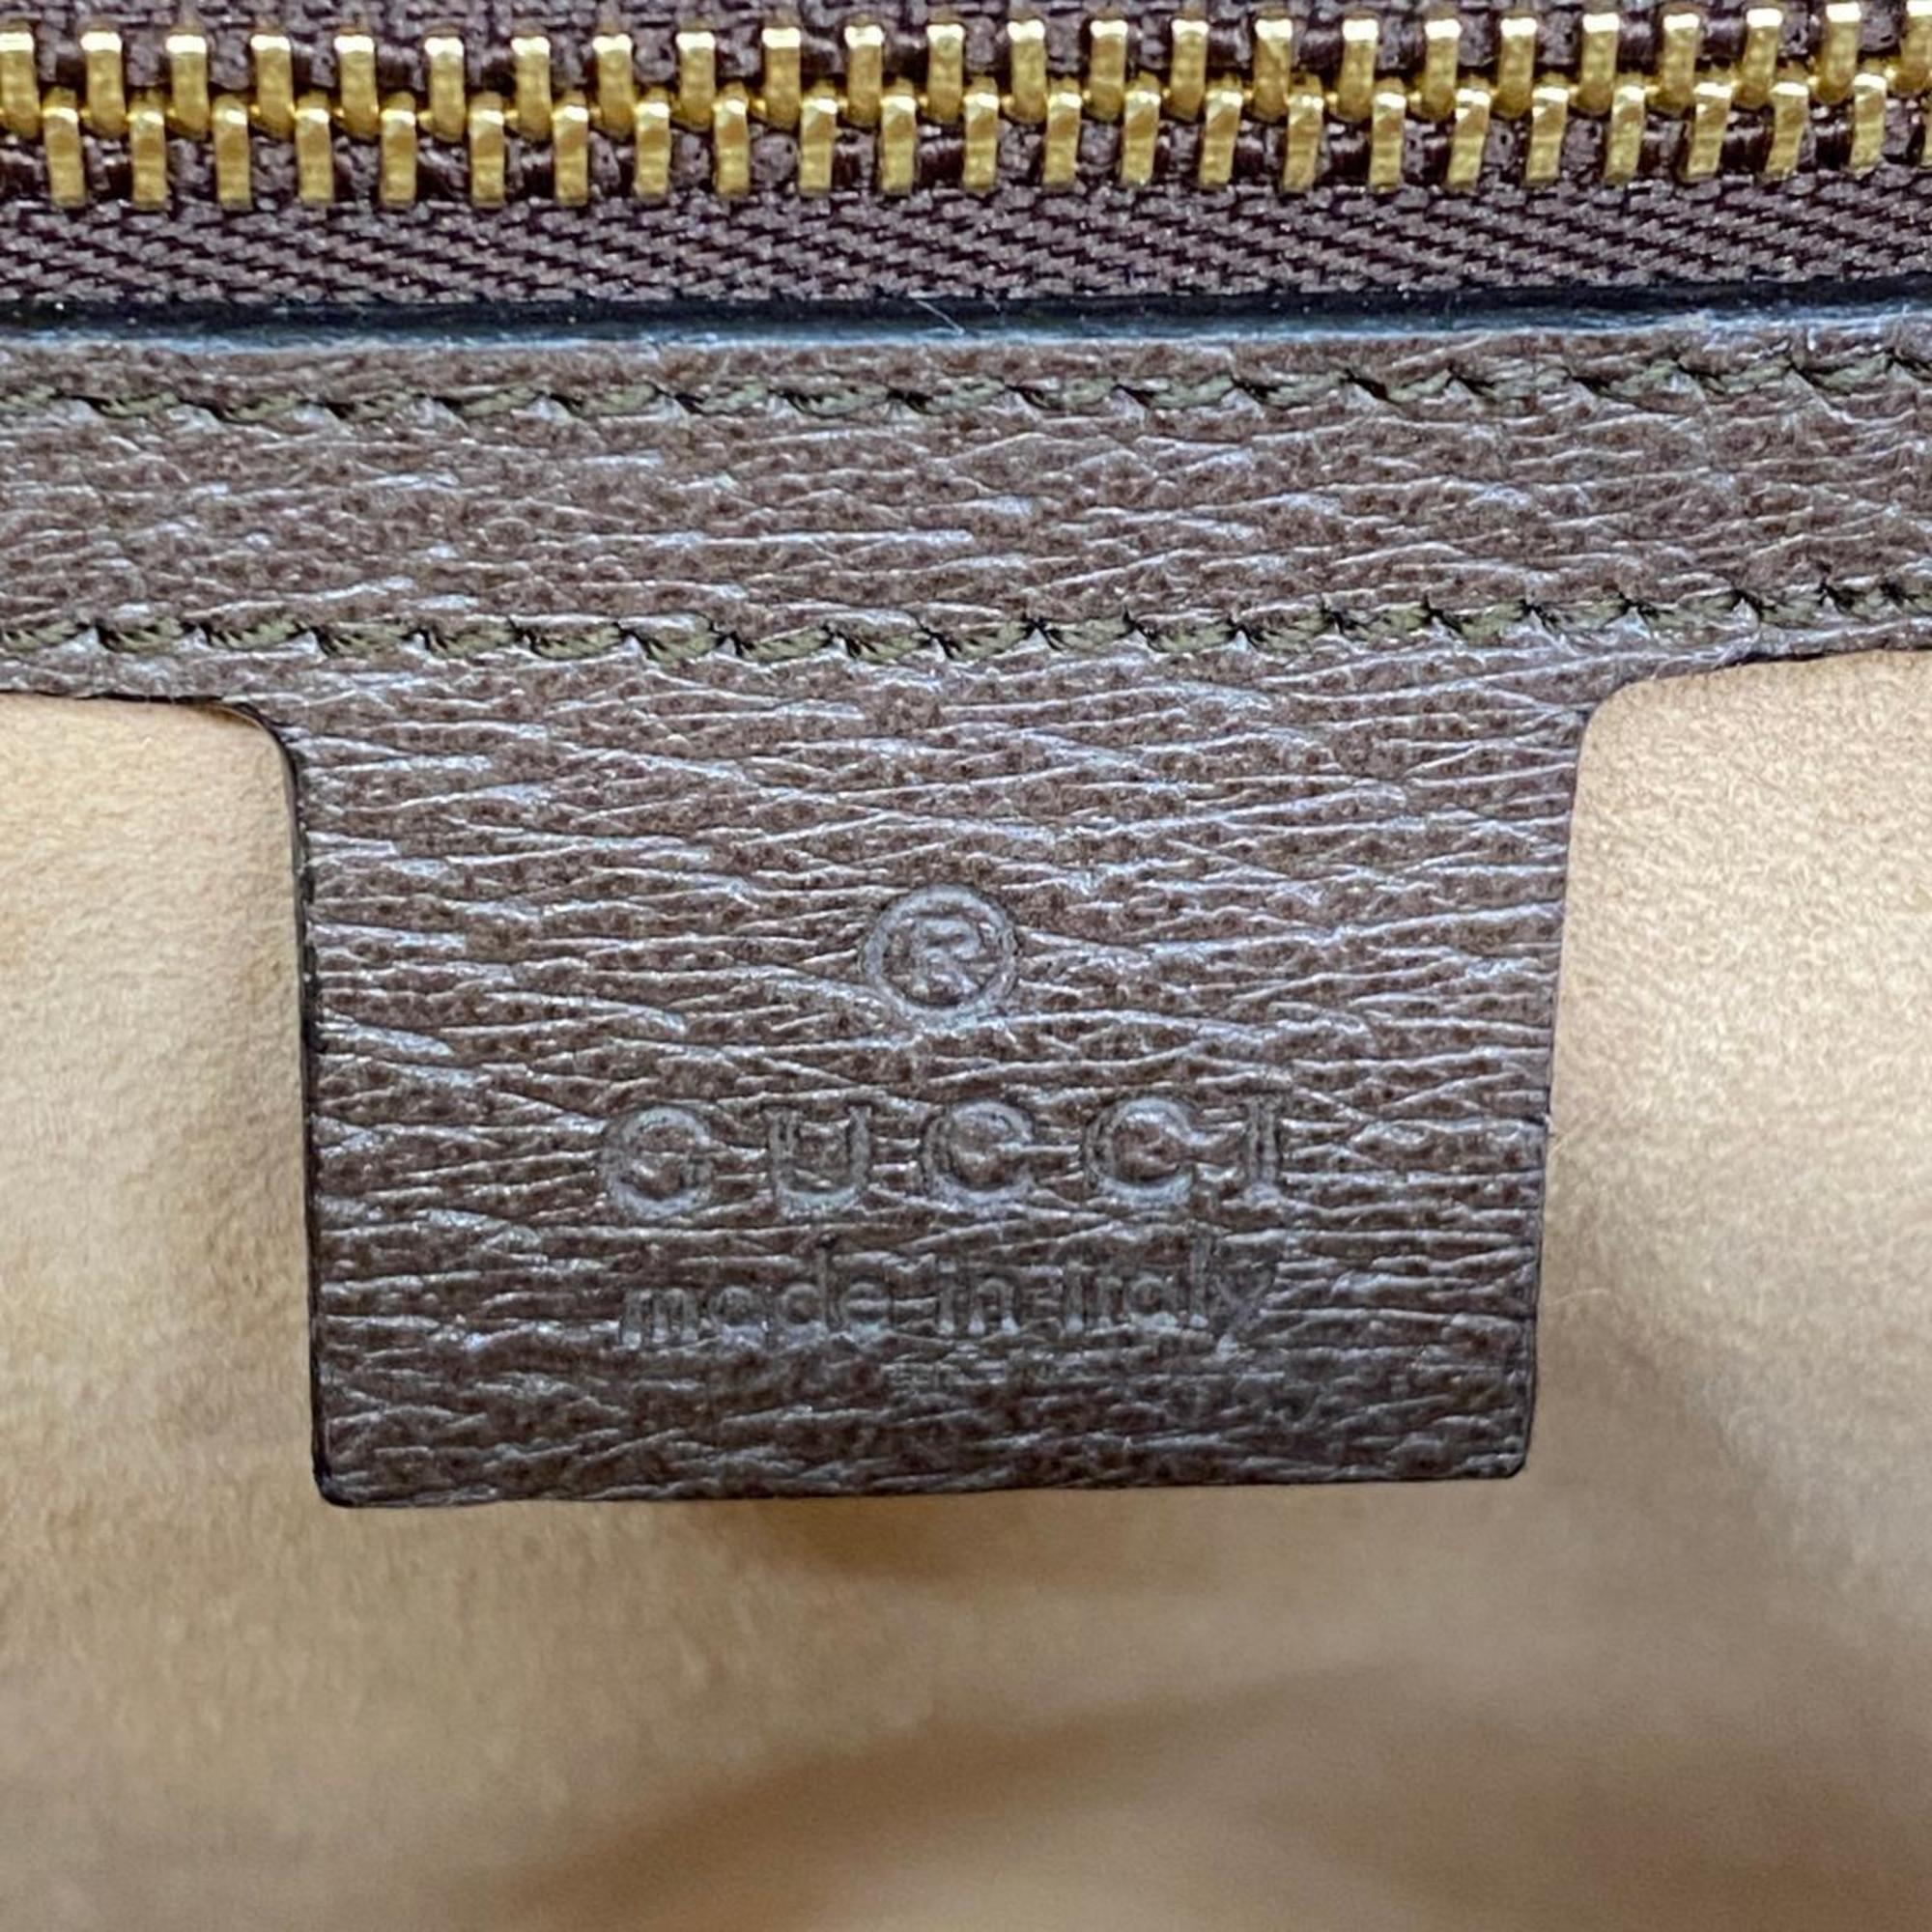 Gucci handbag Ophidia 524533 brown ladies